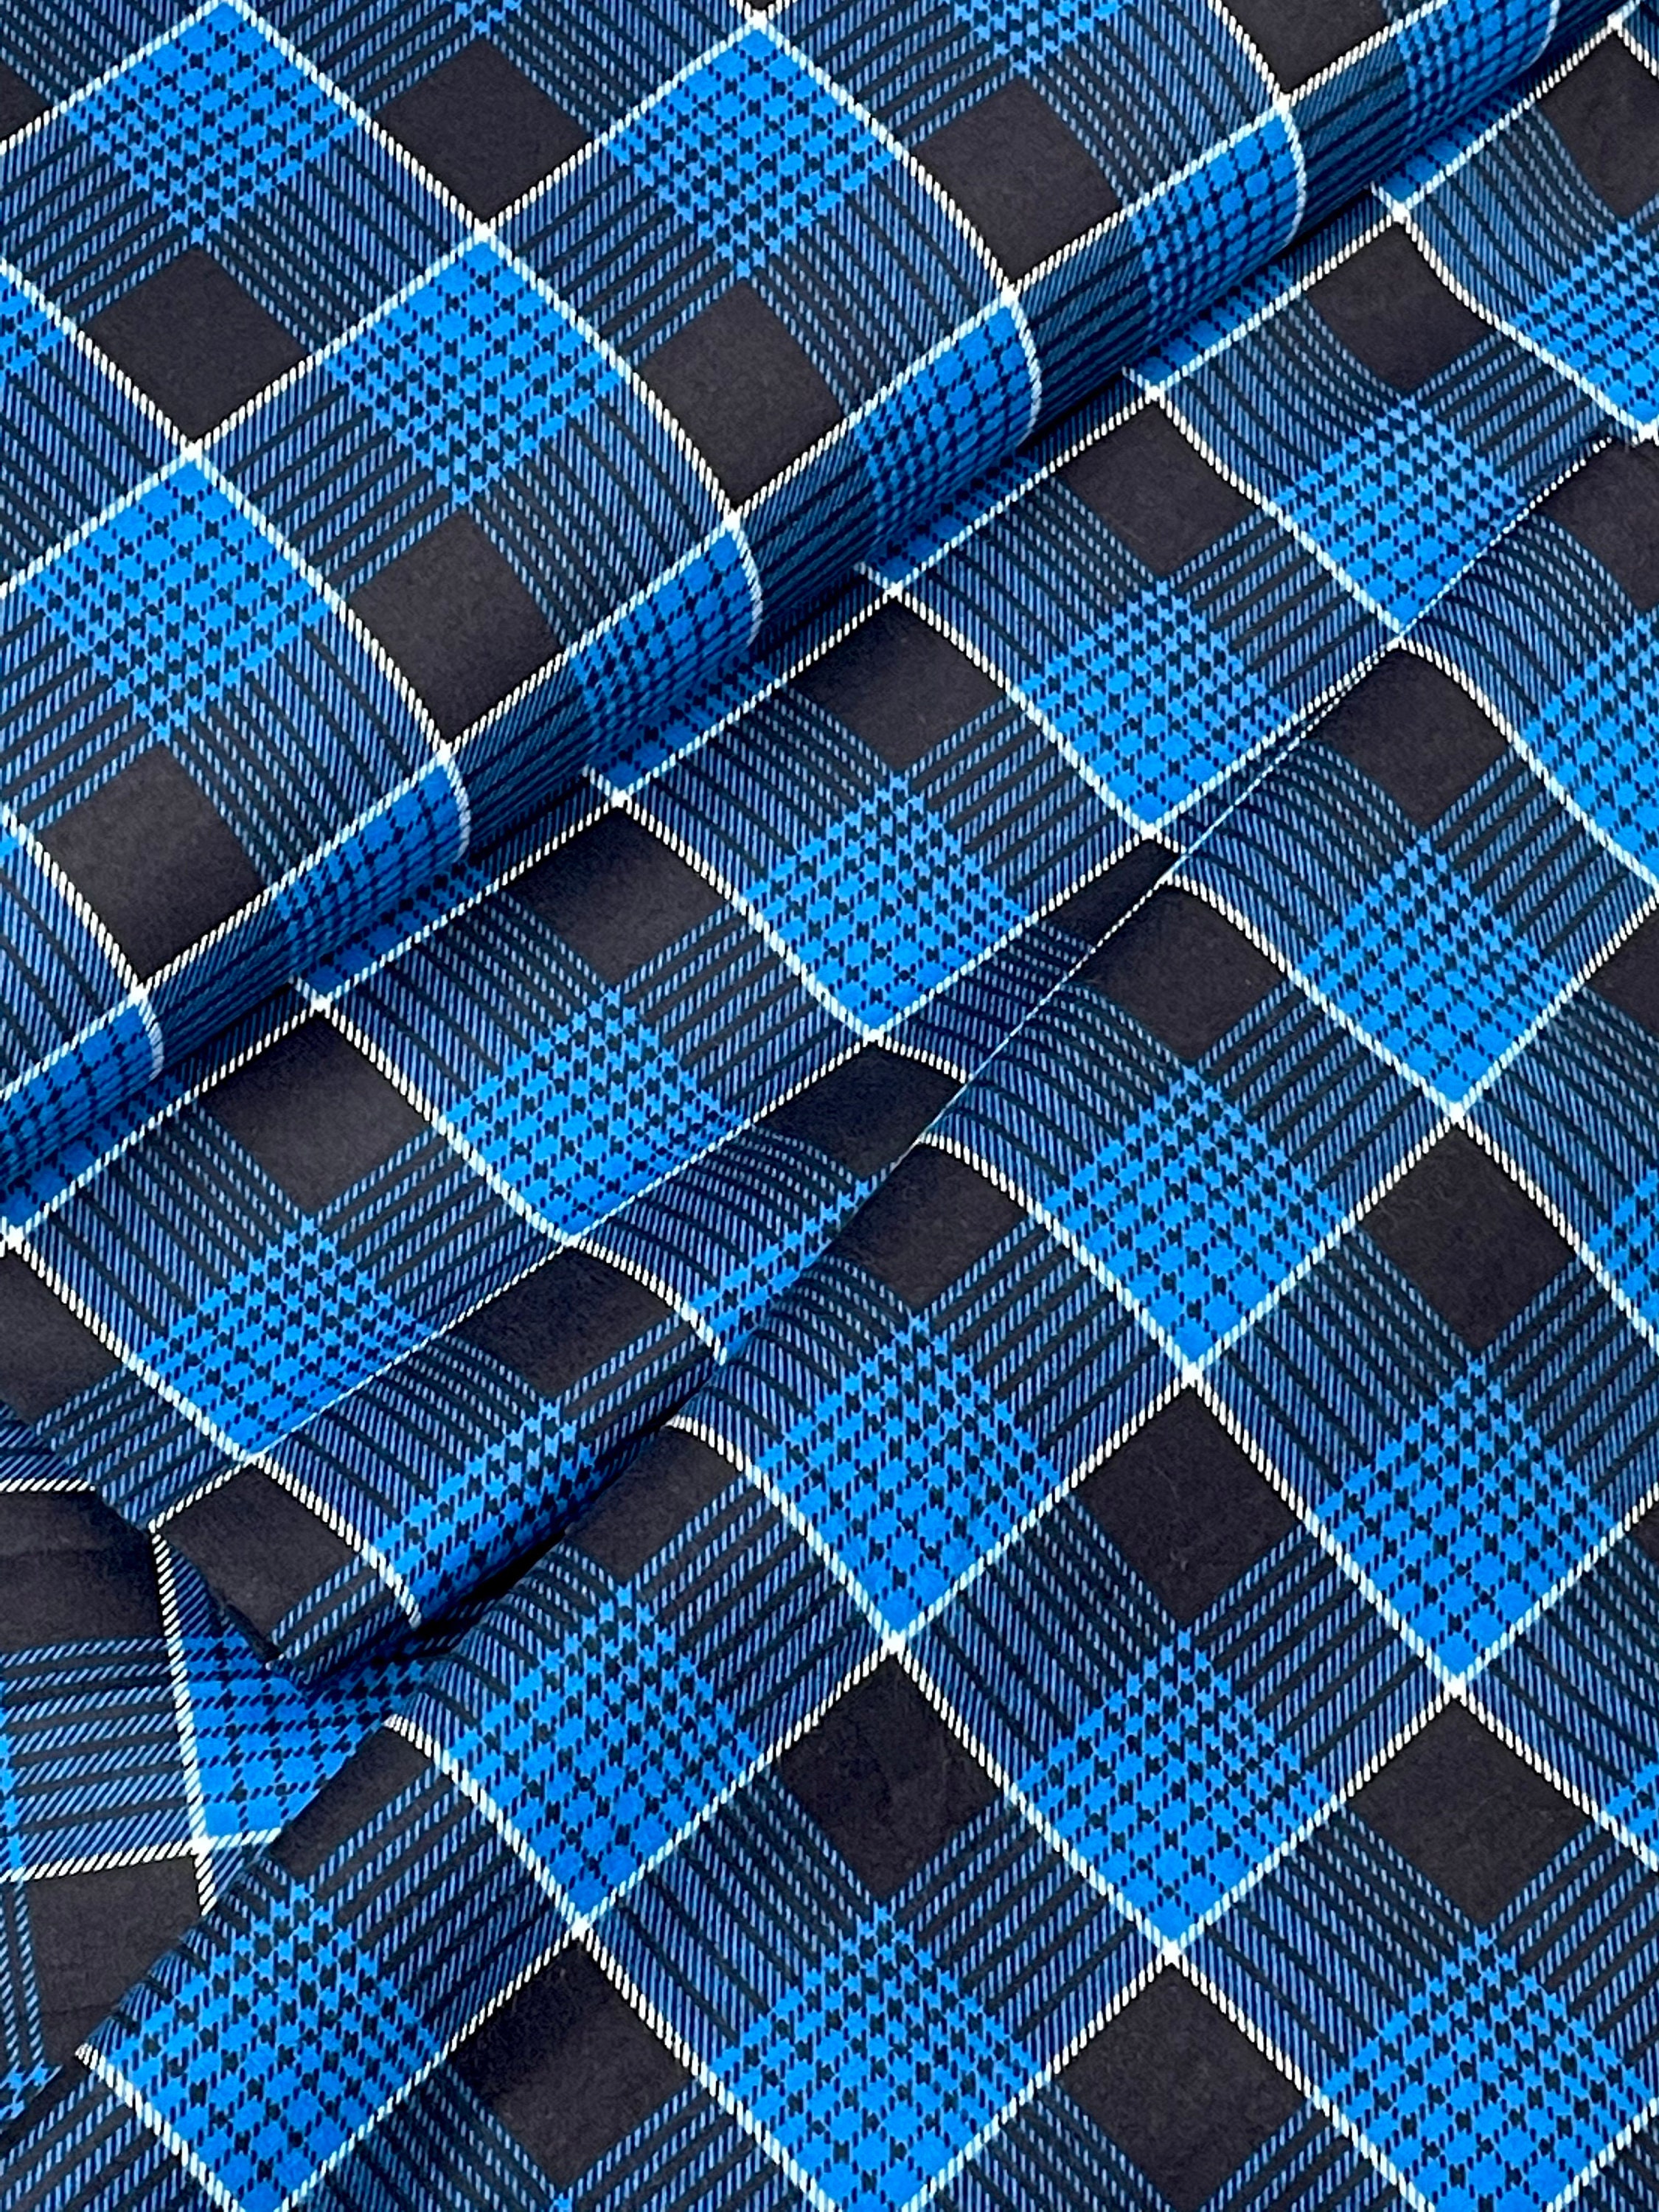 Dark Blue & Green Plaid Flannel From the Scrappensance Line by Kim Diehl. 